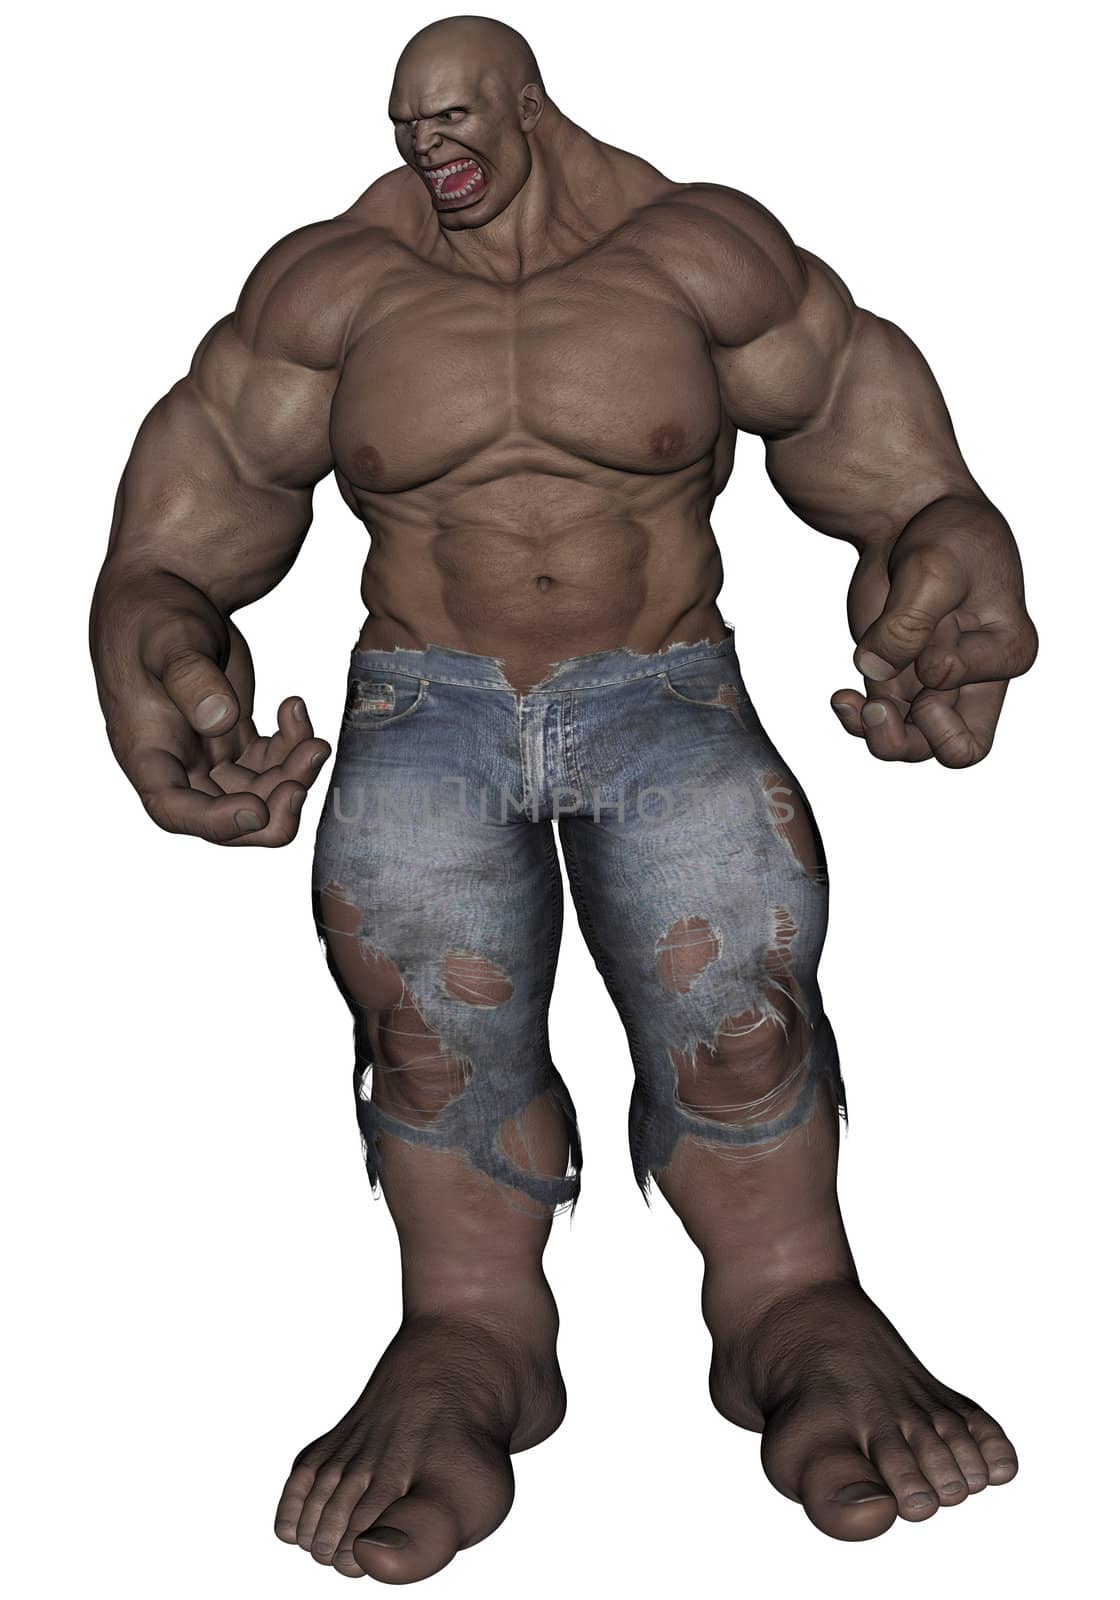 3D rendered monstrous bodybuilder man on white background isolated